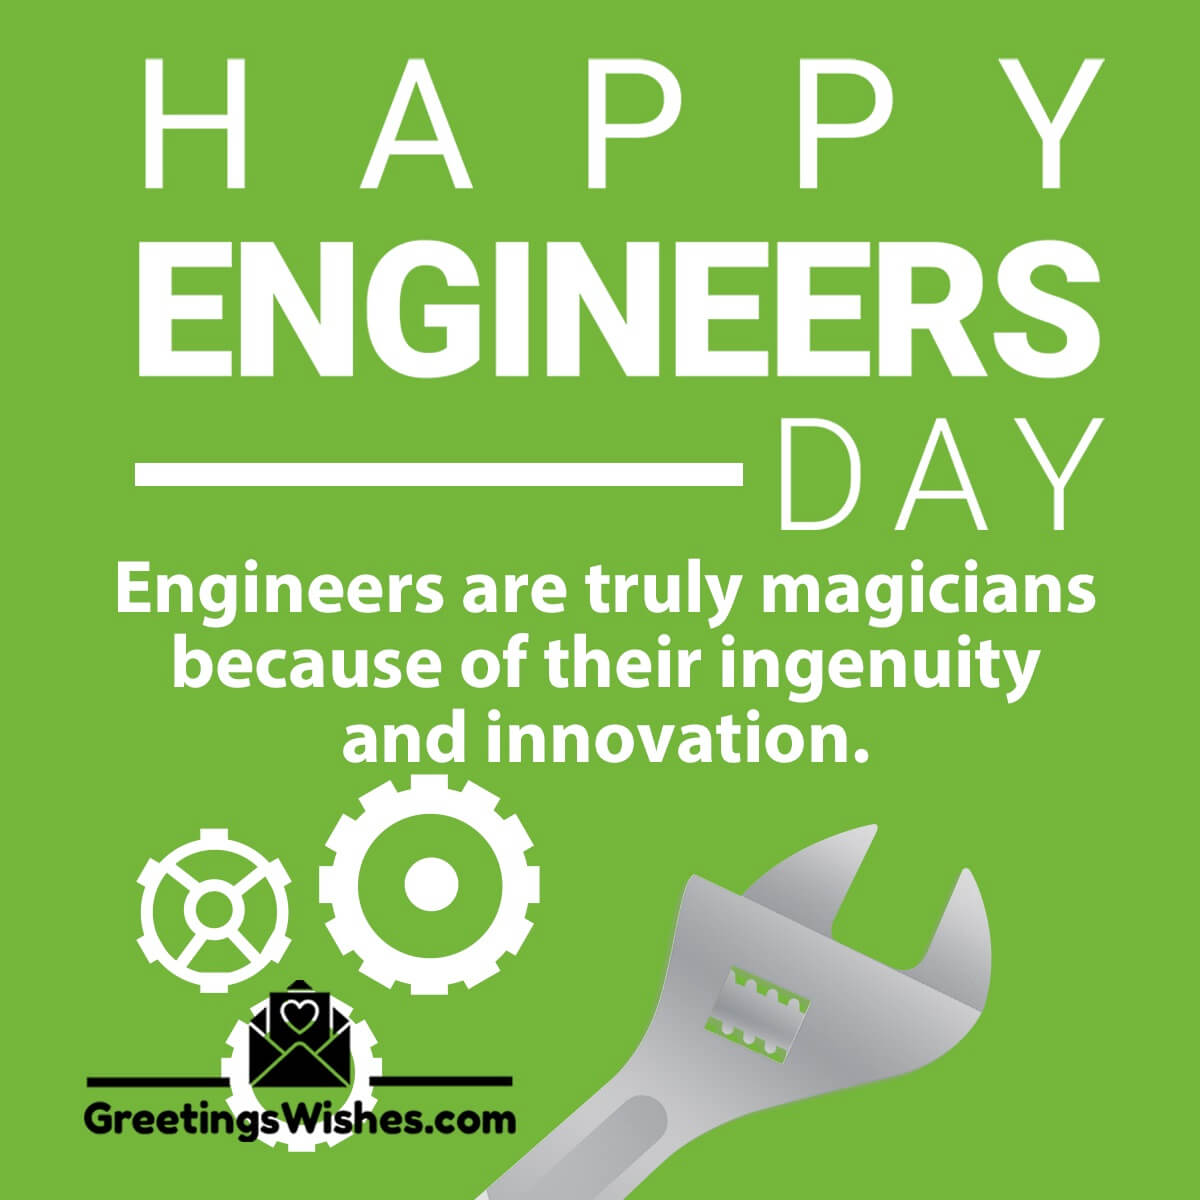 Happy Engineers Day Greetings